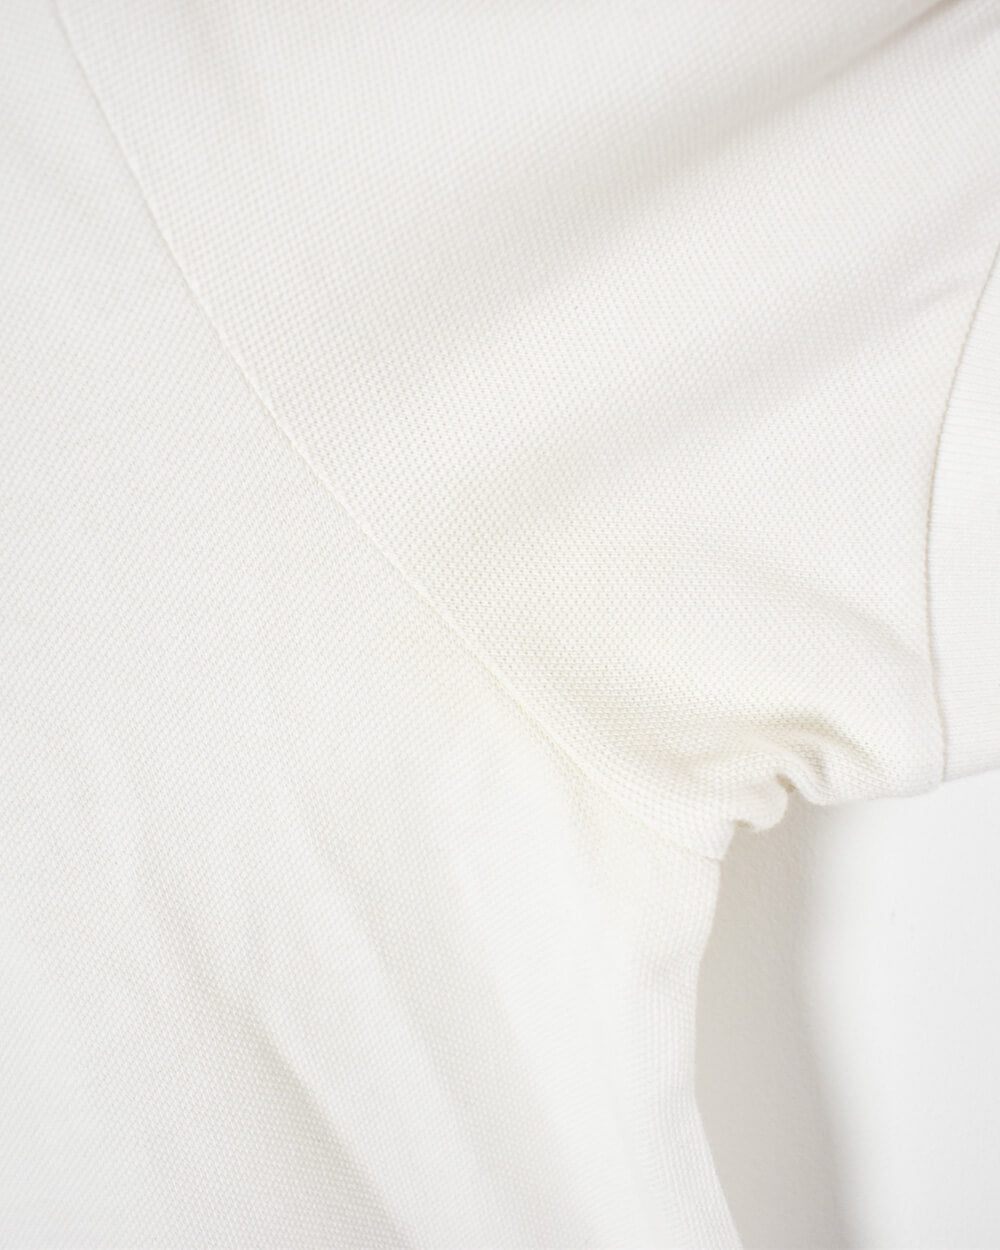 White Ralph Lauren Polo Bear Polo Shirt - Medium